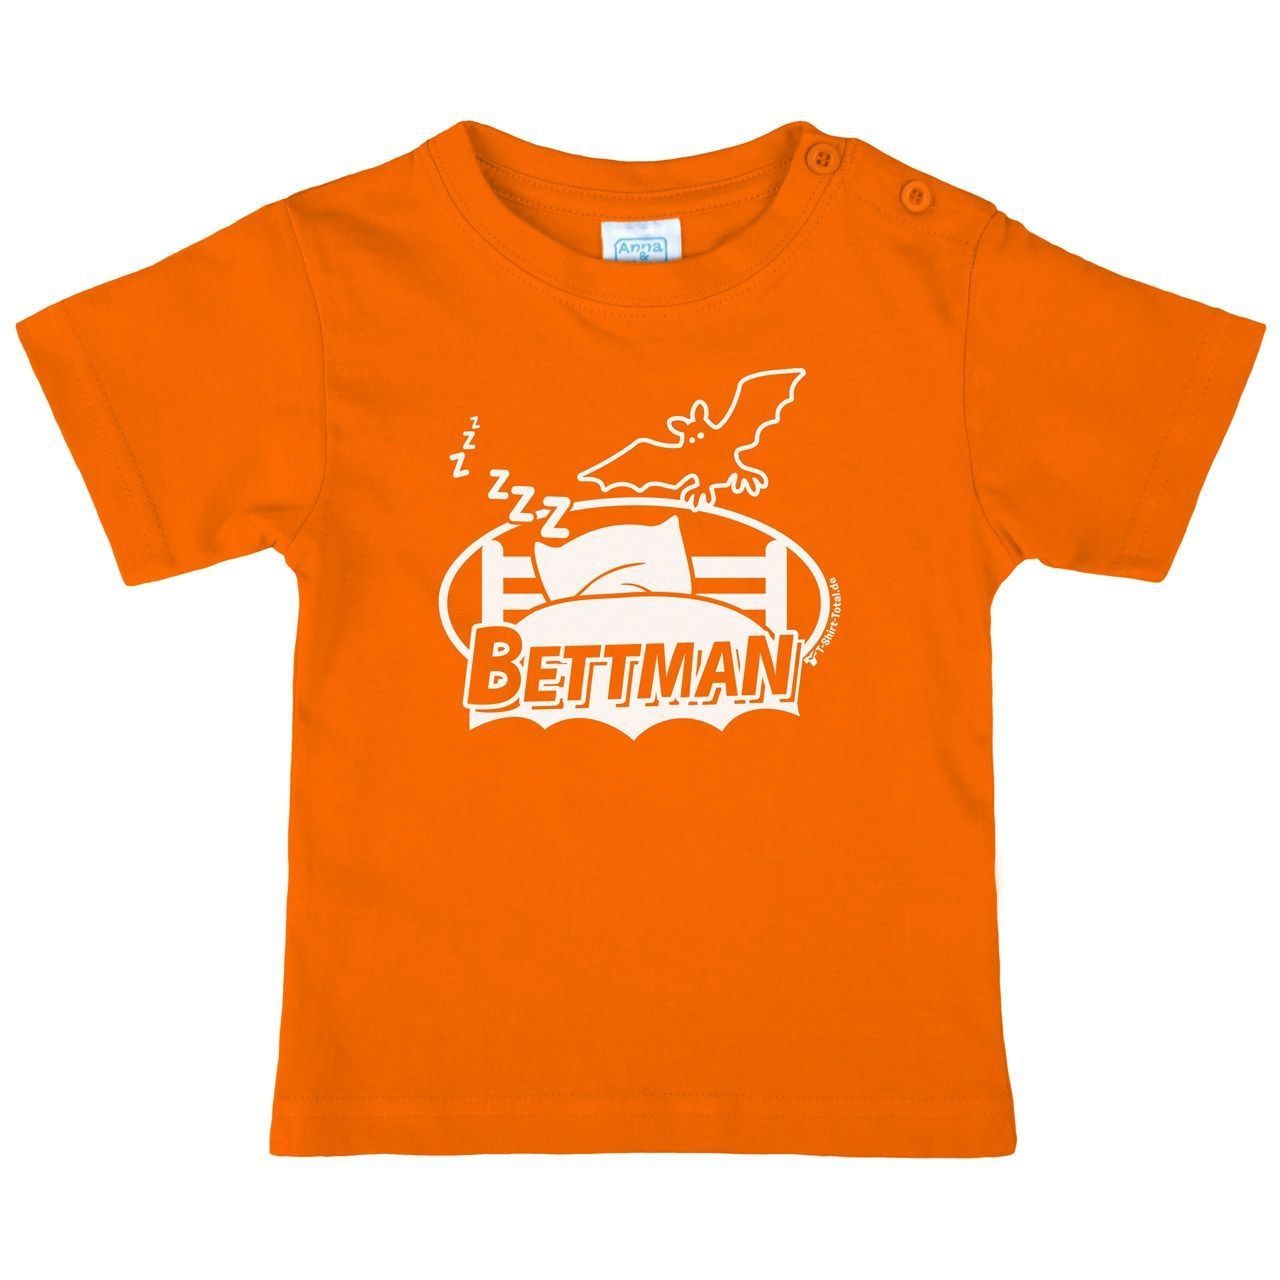 Bettman Kinder T-Shirt orange 56 / 62